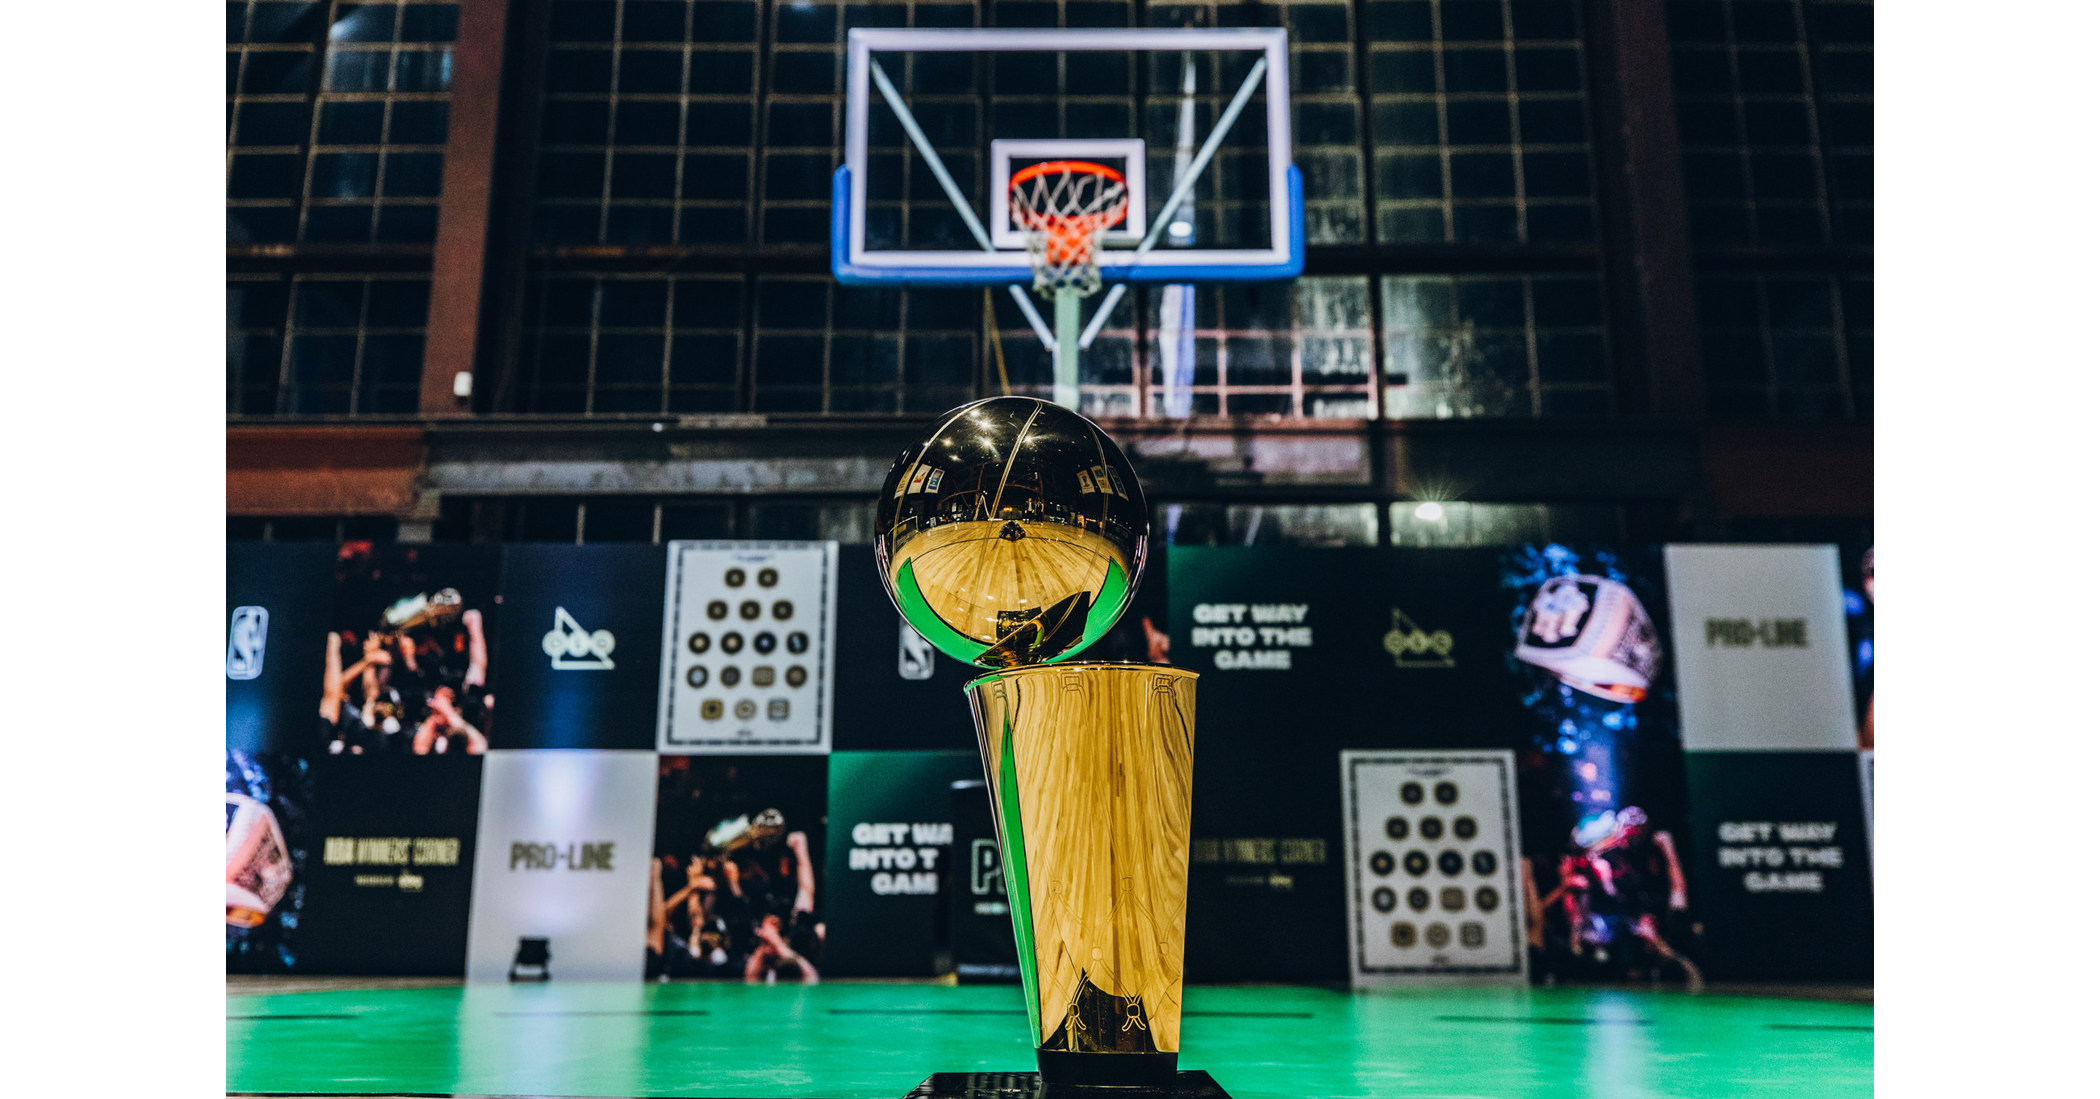 Basketball: NBA championship trophy draws crowd in Kingston